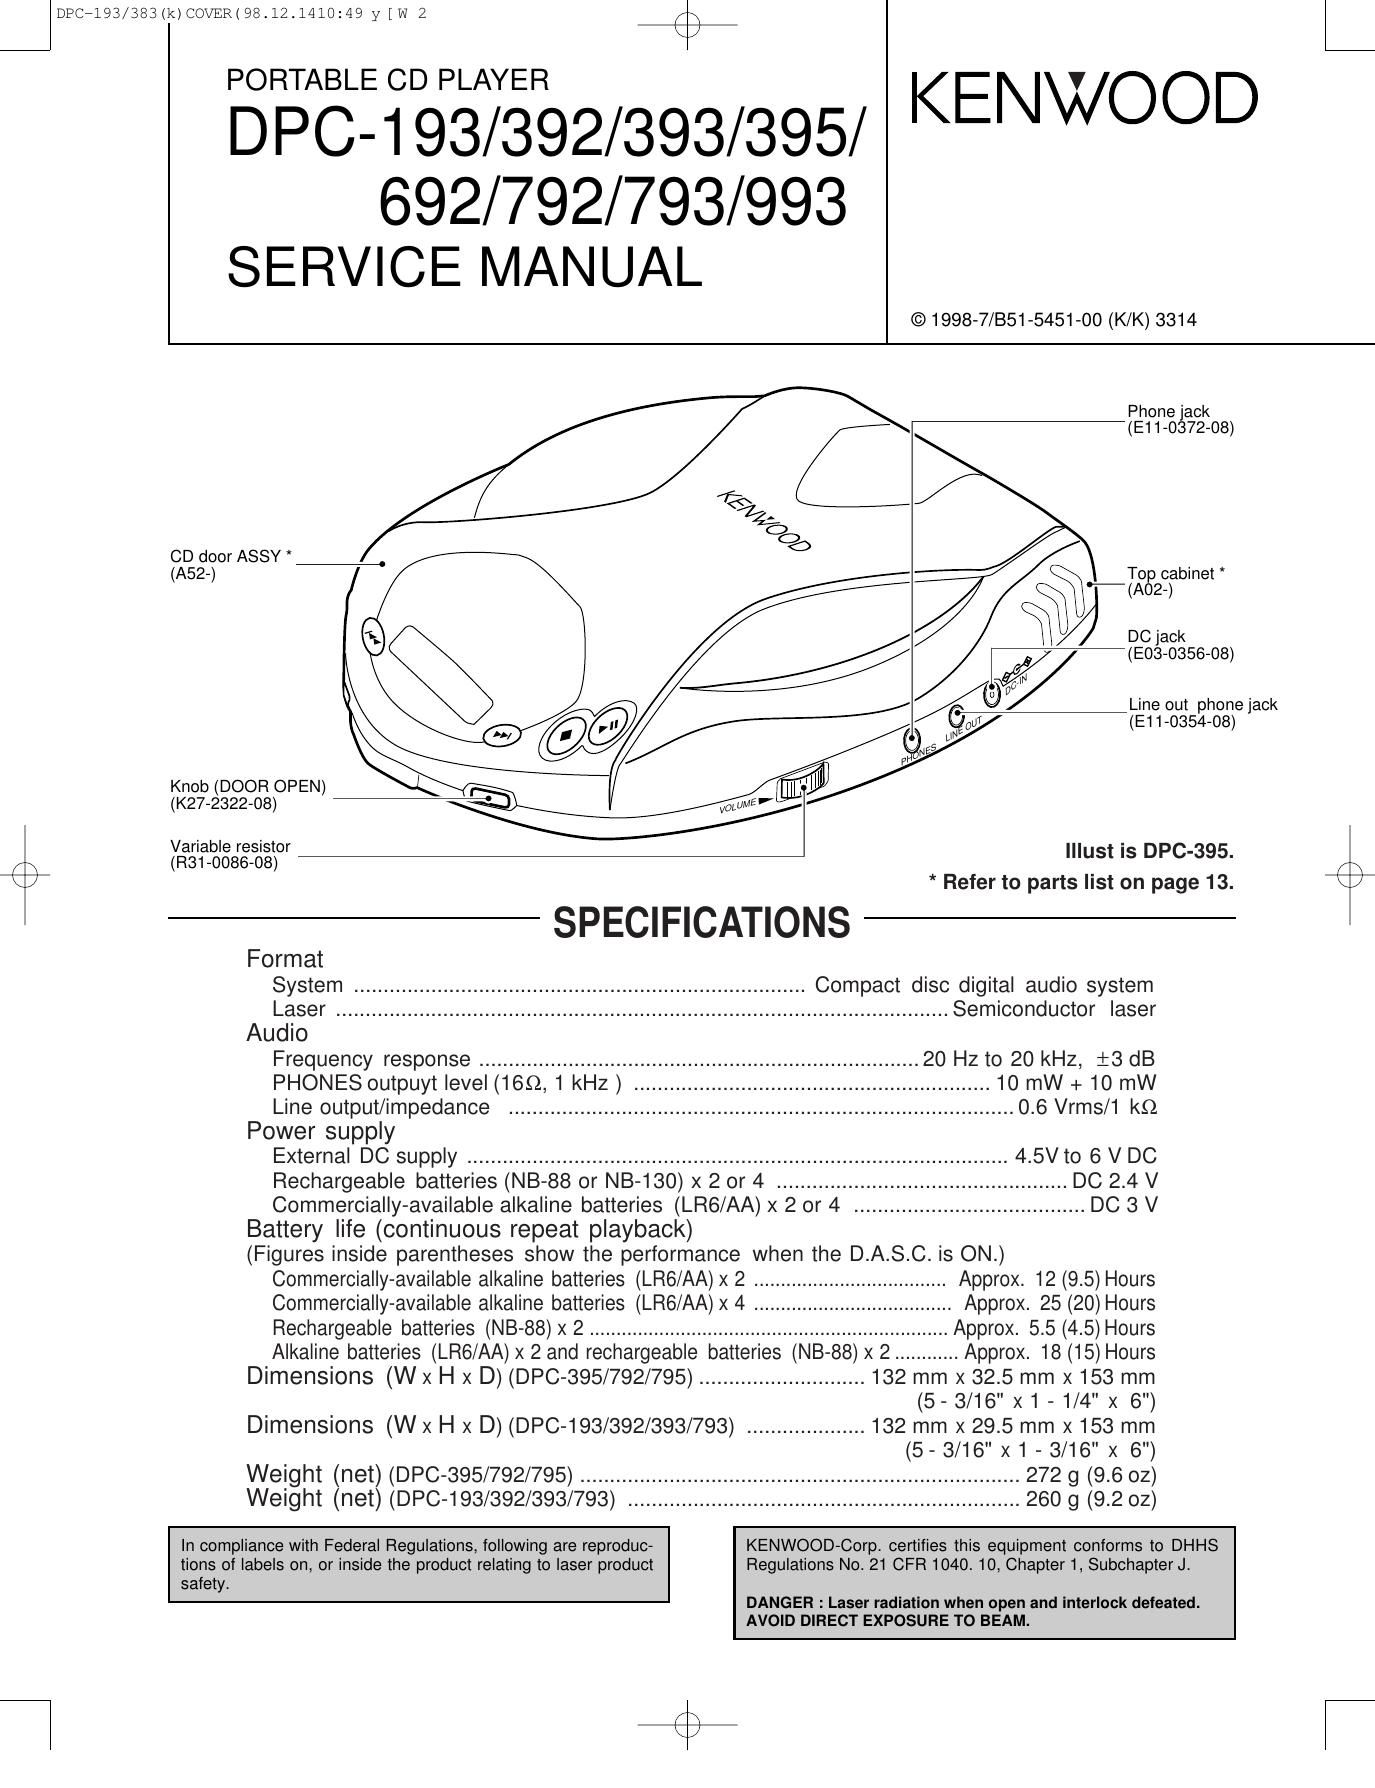 Kenwood DPC 692 Service Manual